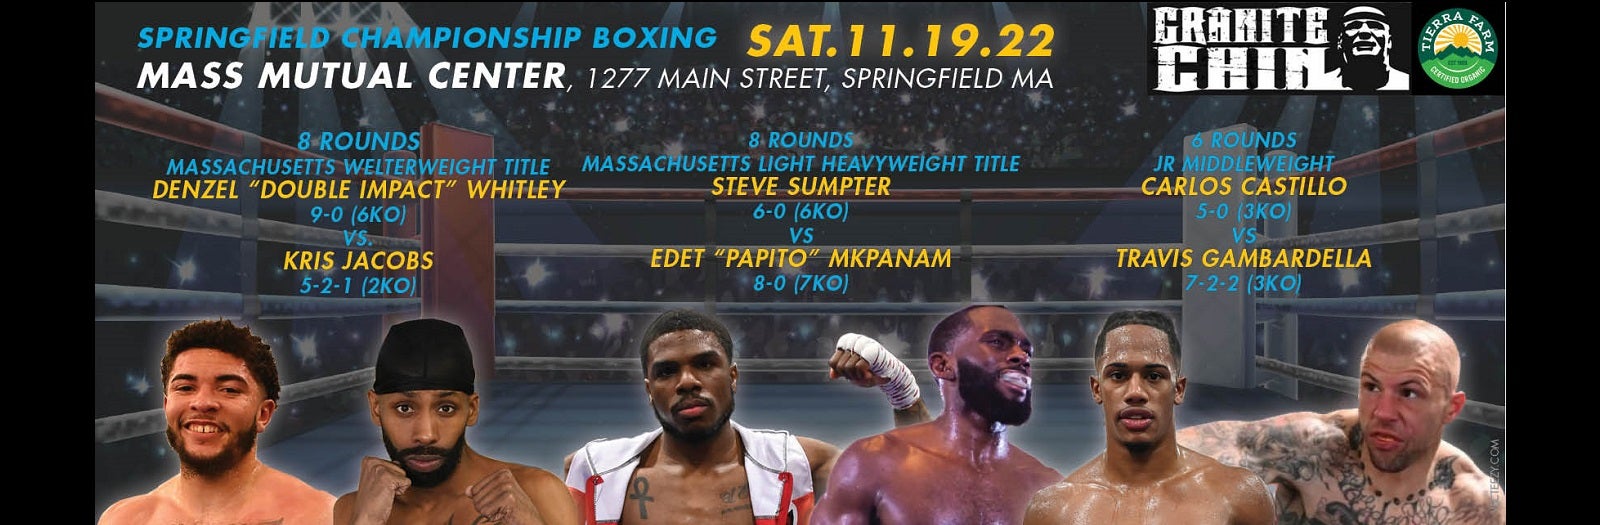 Springfield Championship Boxing